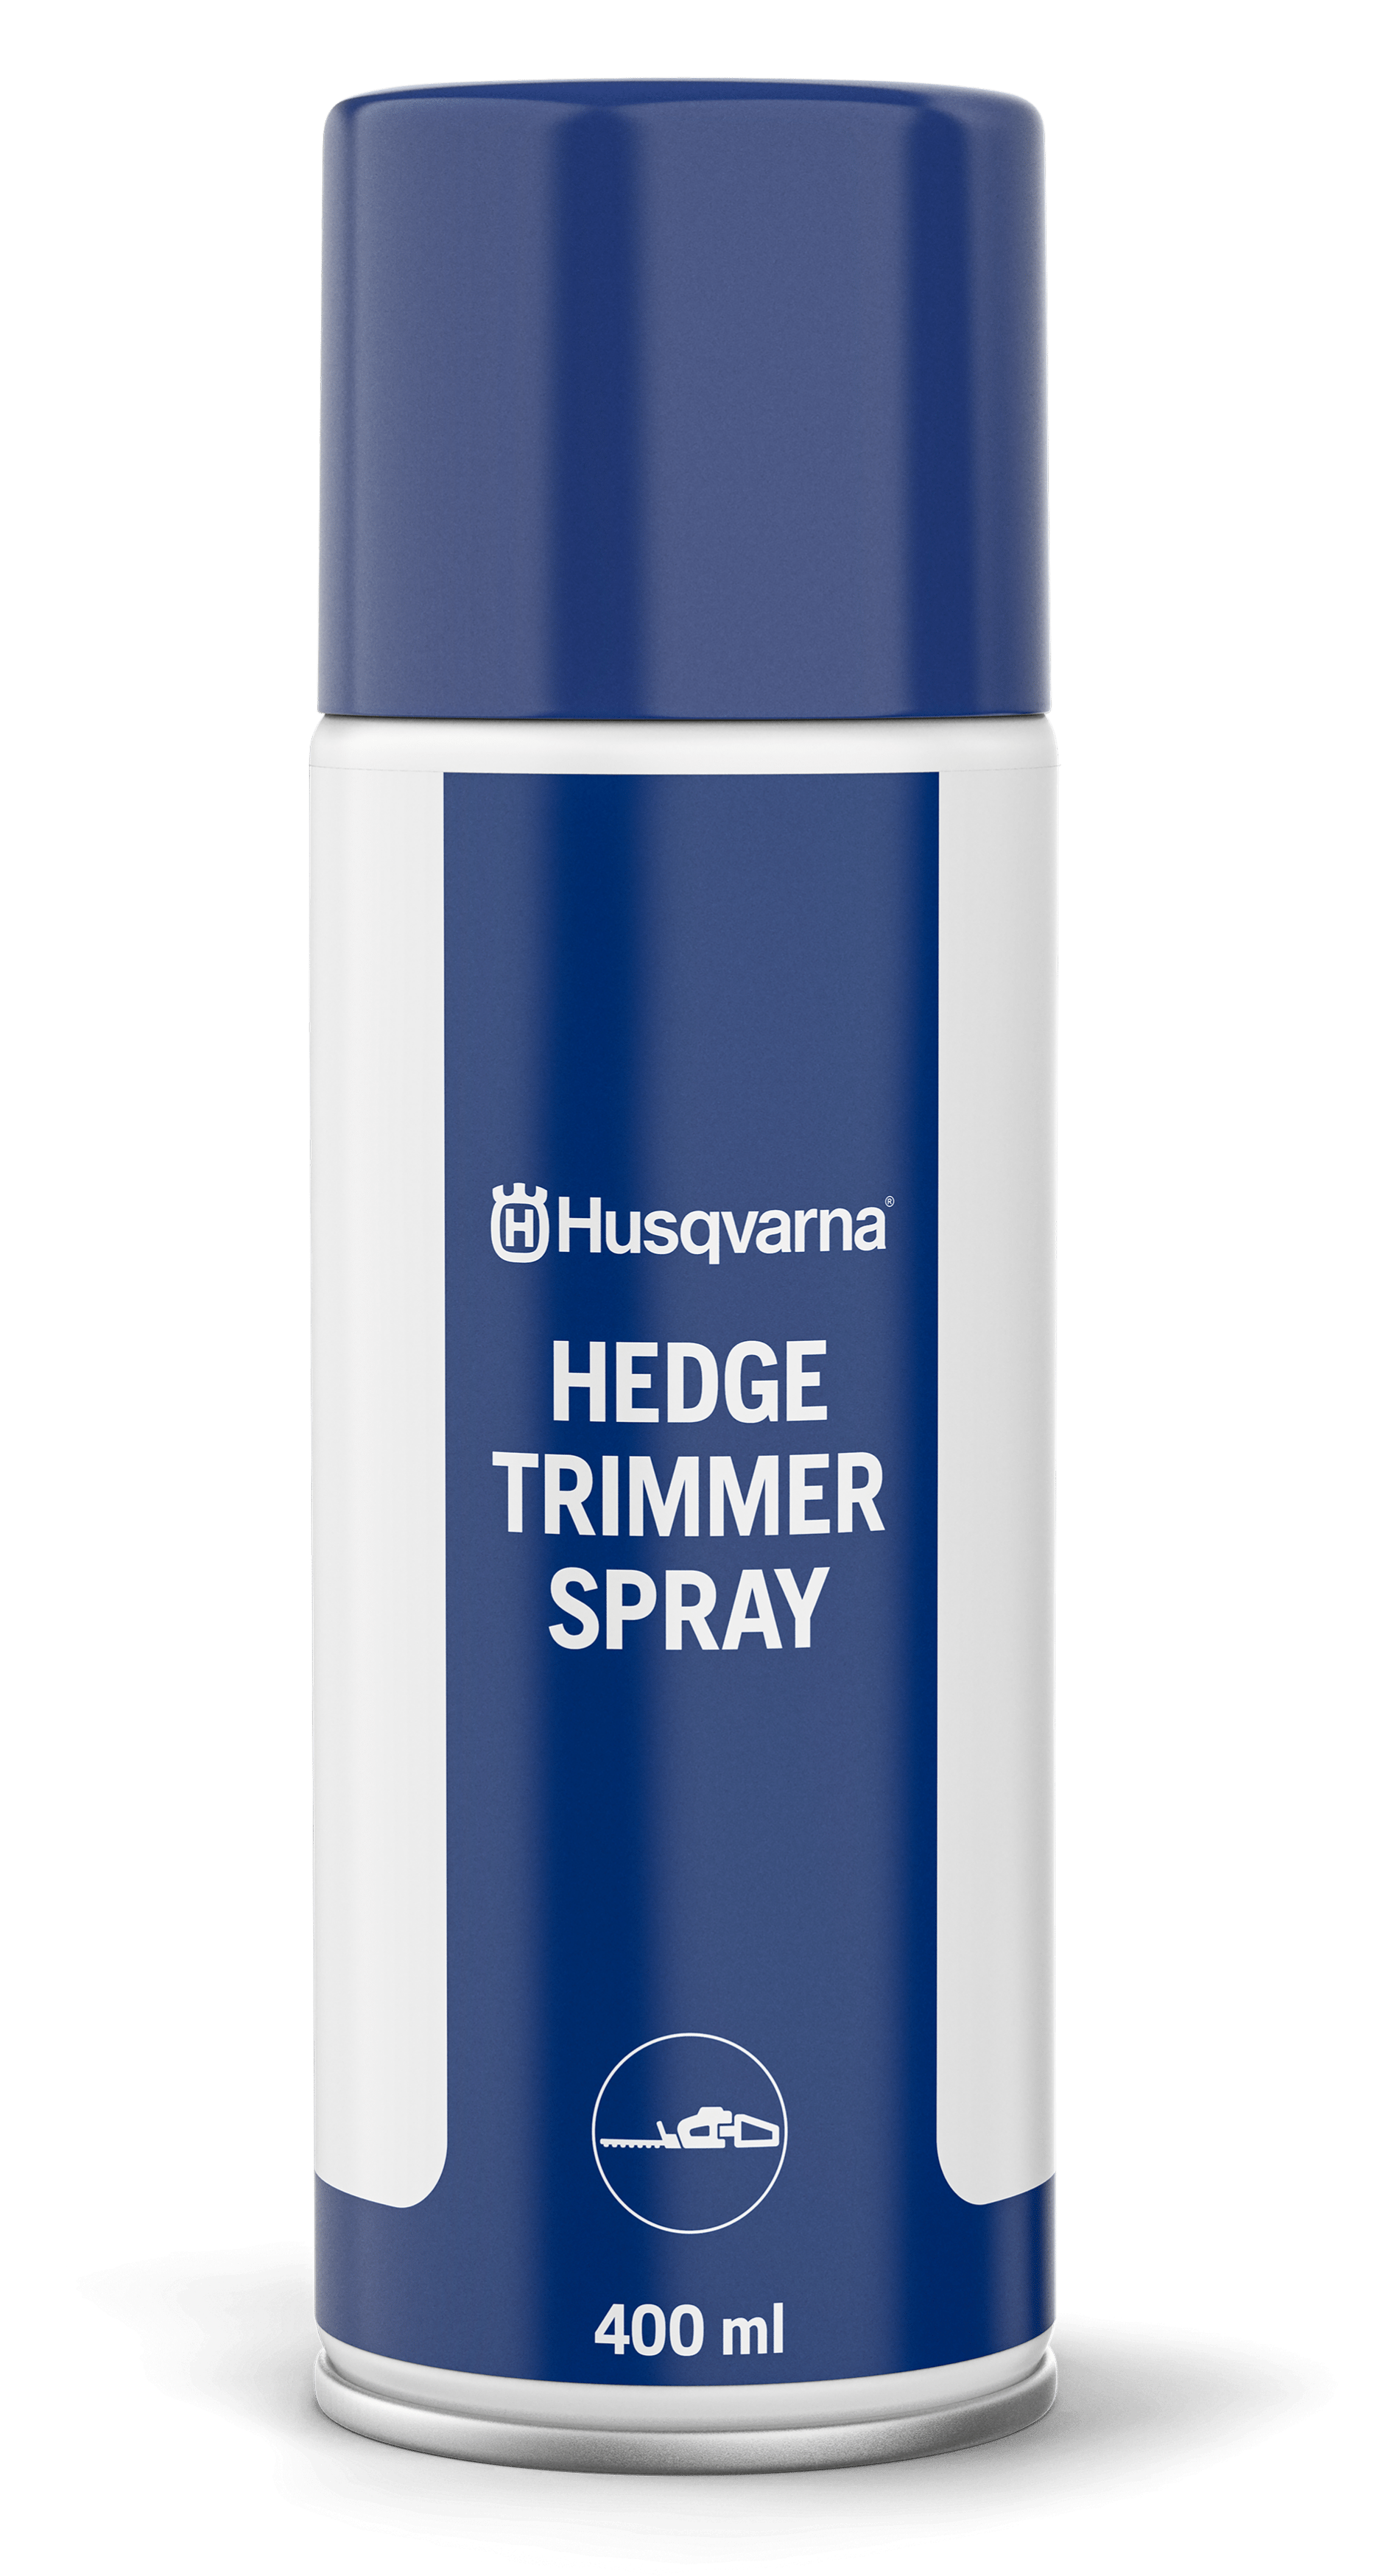 Hedge trimmer spray image 0